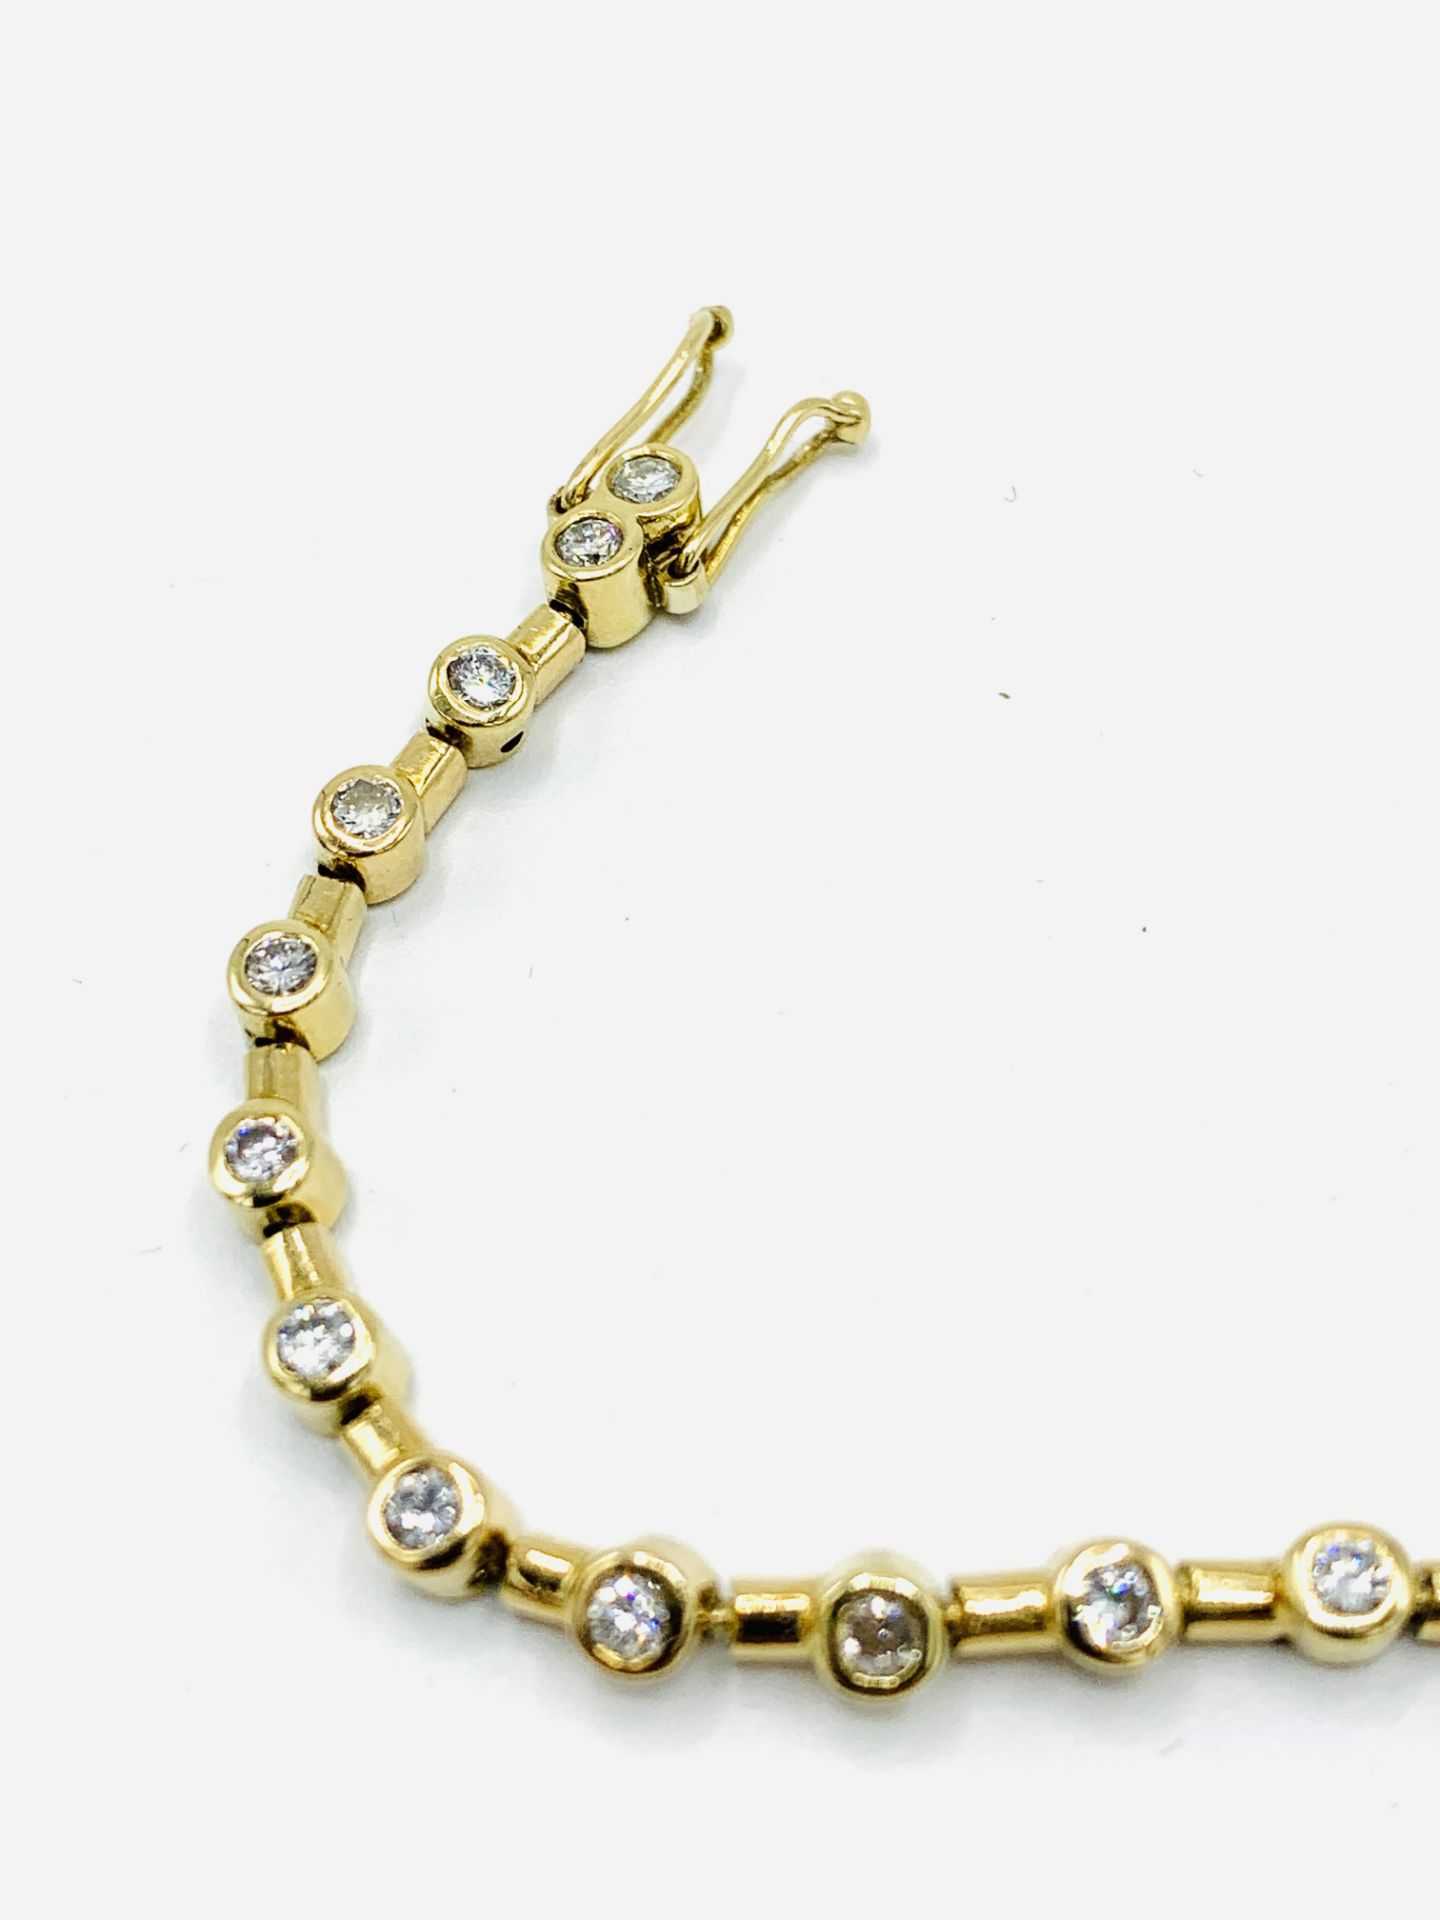 18ct gold and diamond bracelet - Image 3 of 4